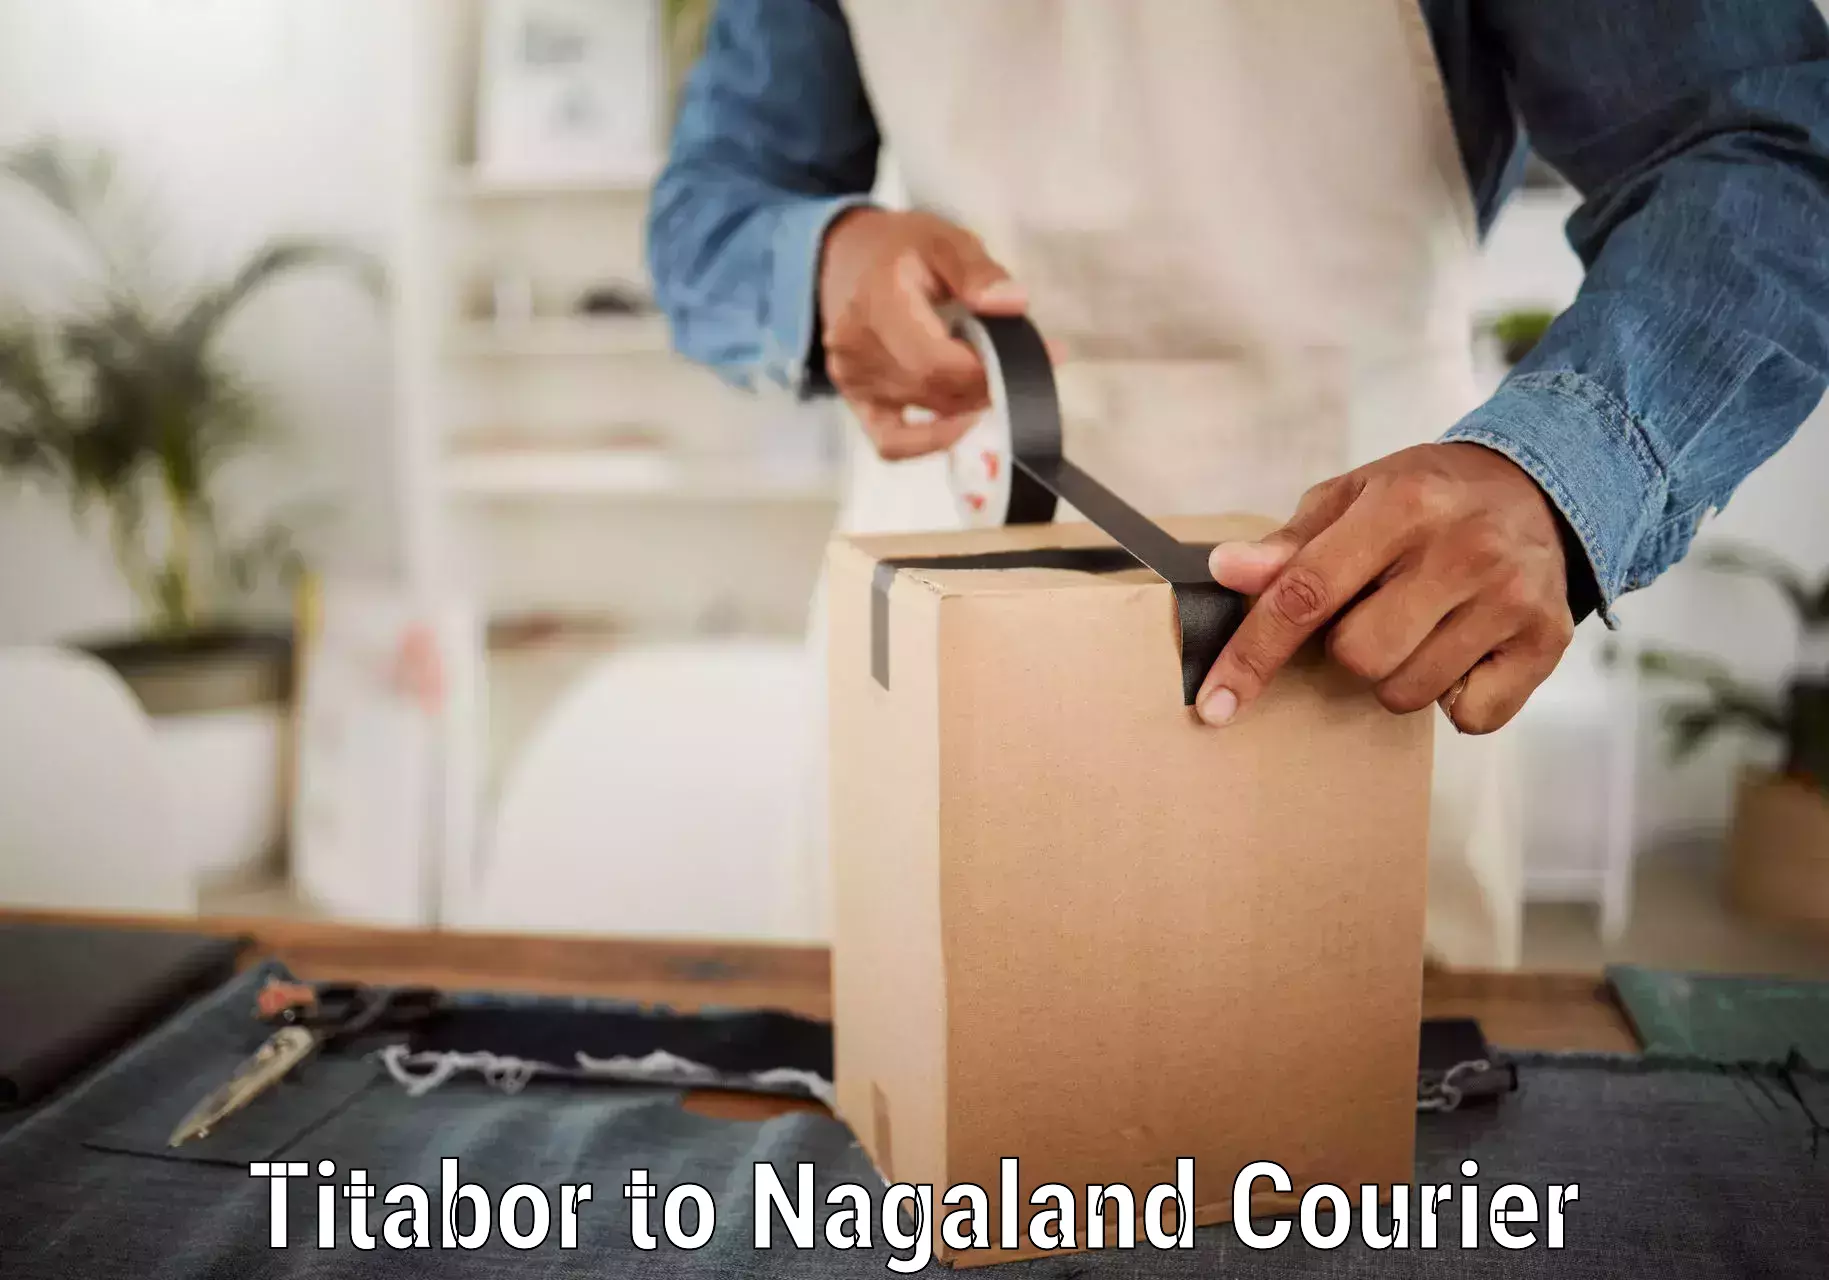 Affordable parcel service Titabor to Nagaland